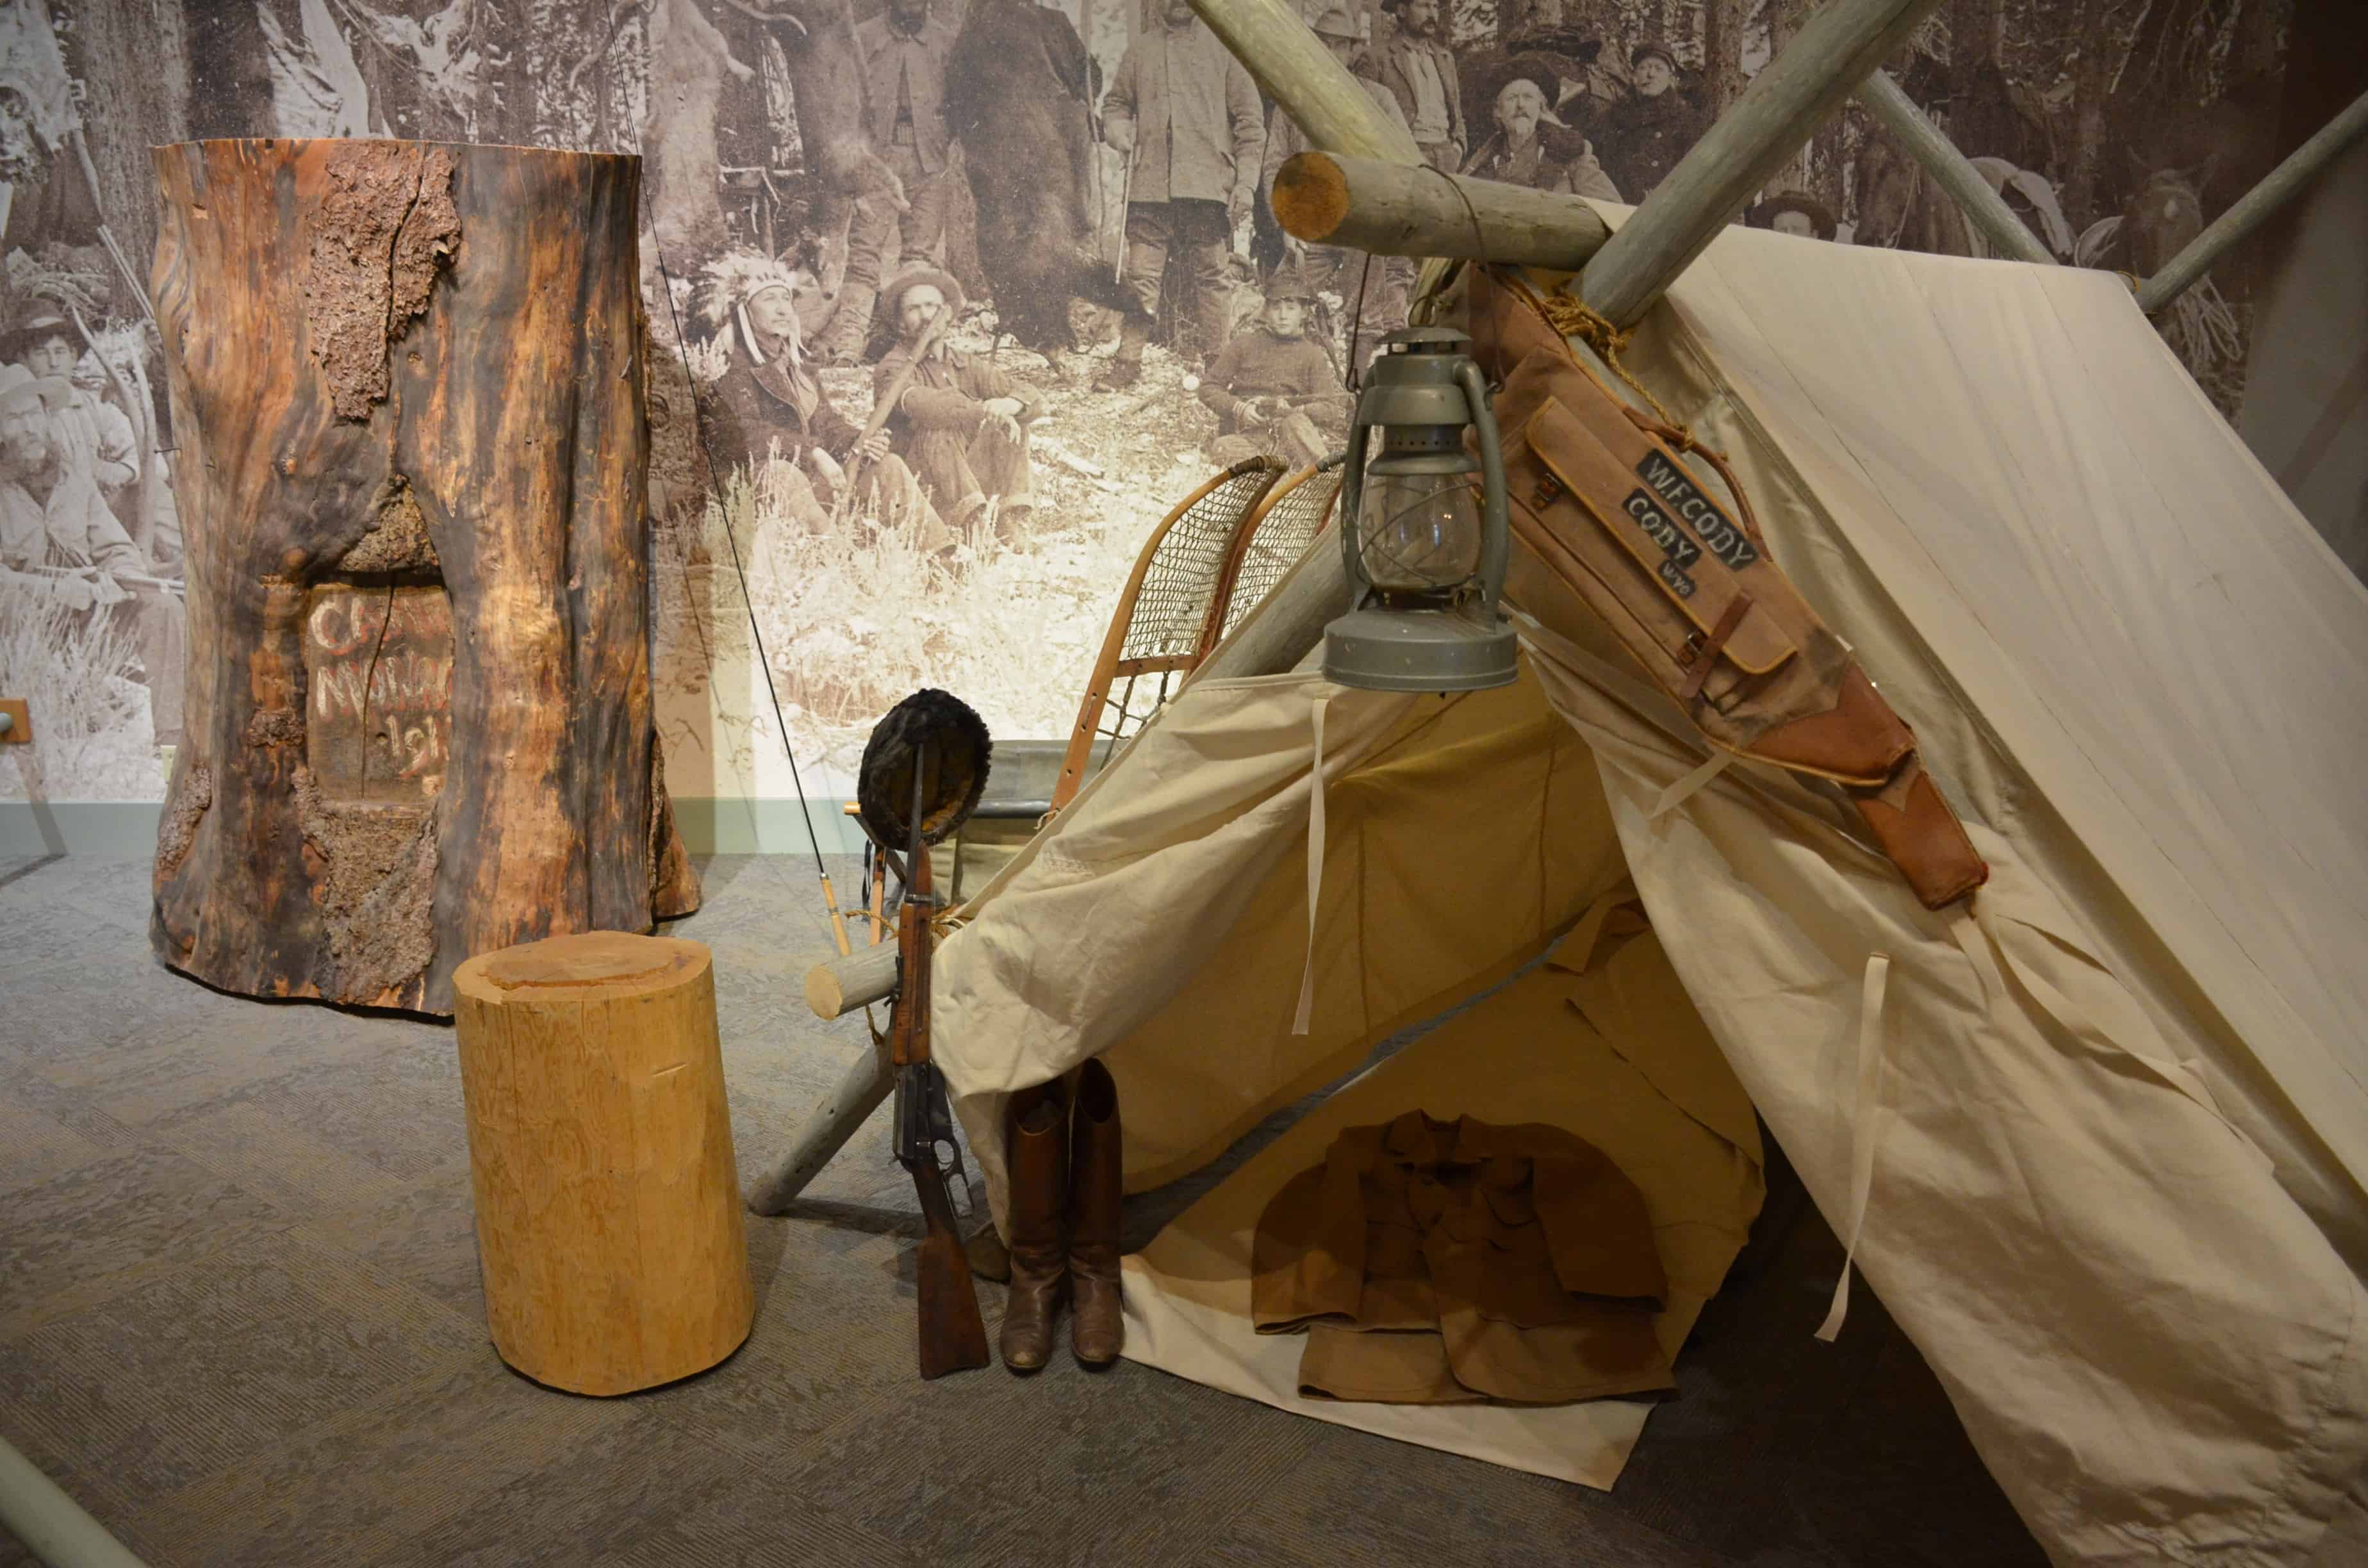 Camp Monaco at the Buffalo Bill Museum